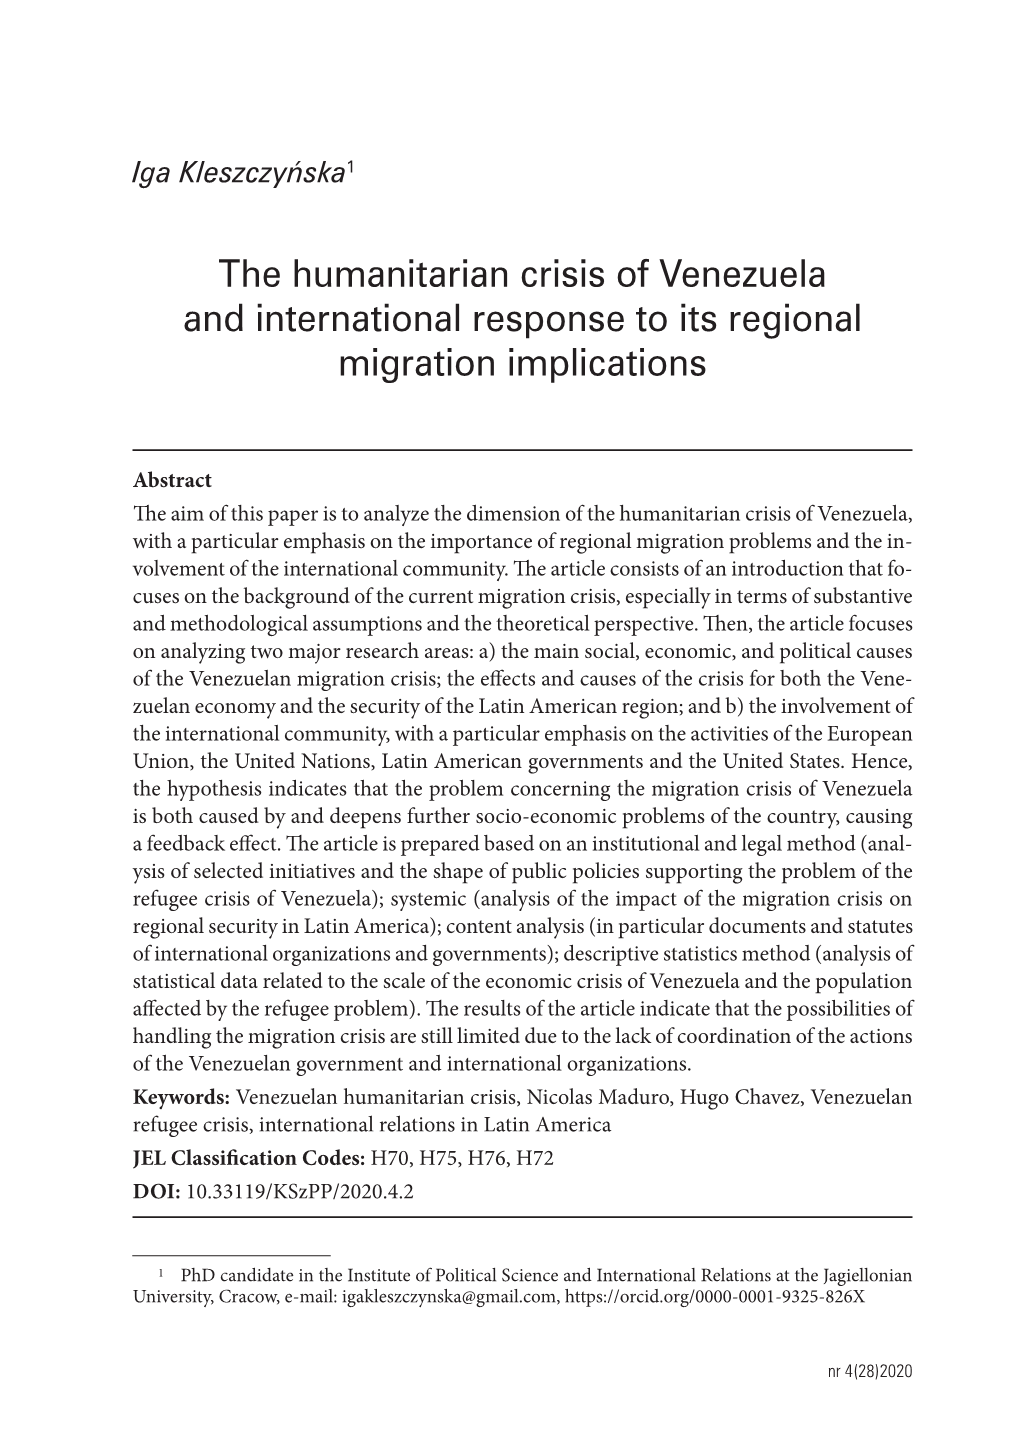 The Humanitarian Crisis of Venezuela and International Response to Its Regional Migration Implications